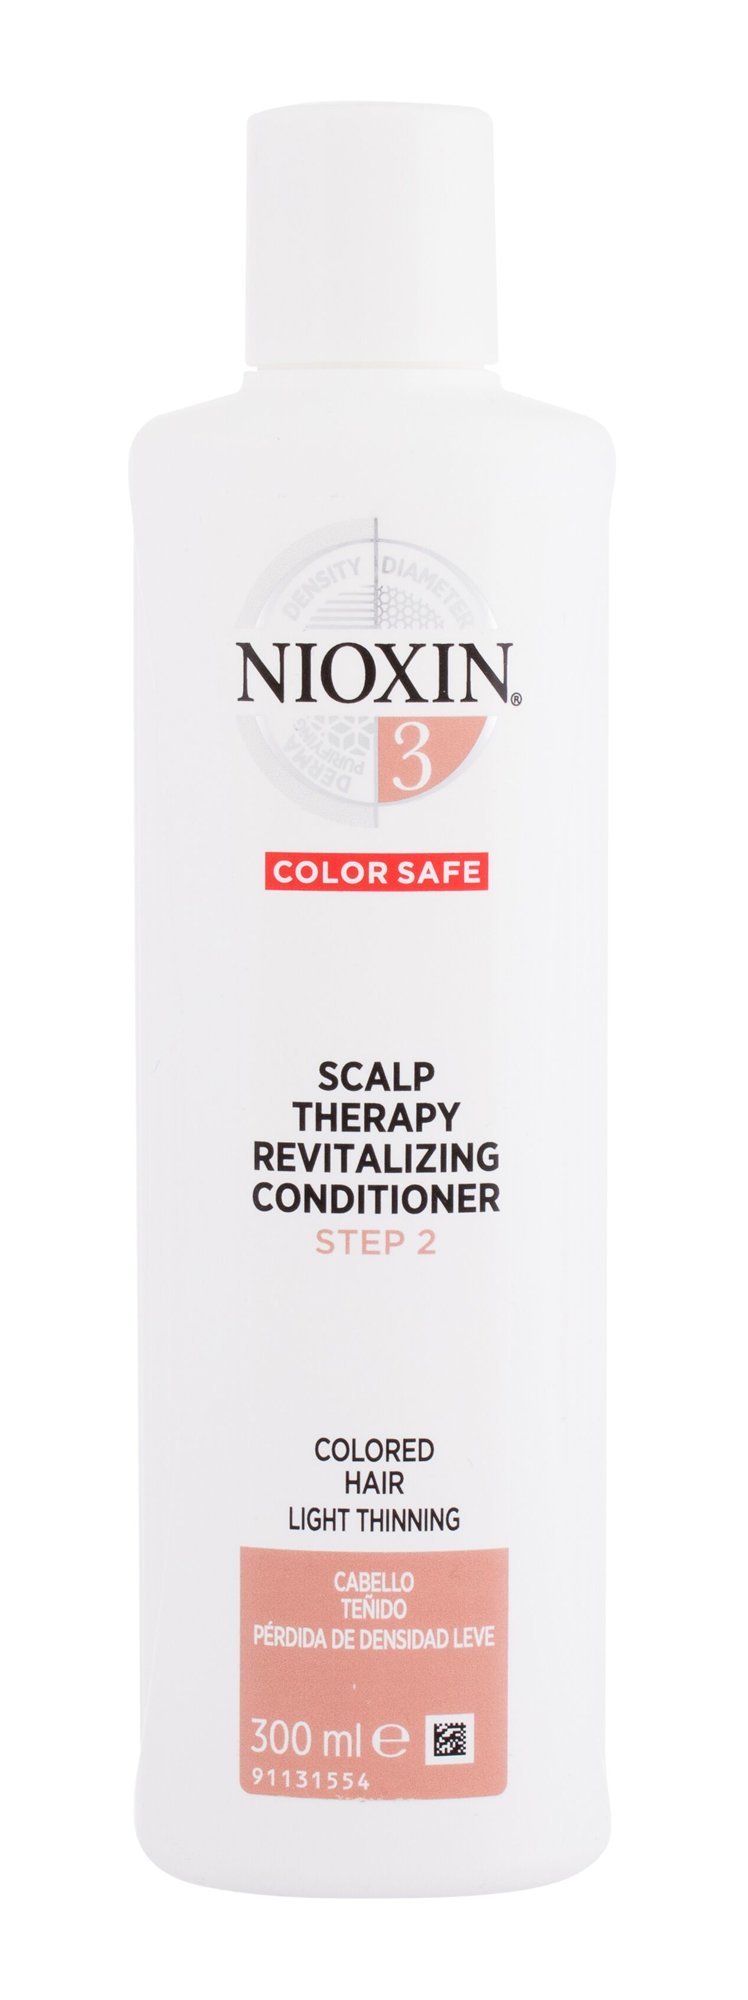 Nioxin System 3 Color Safe Scalp Therapy kondicionierius